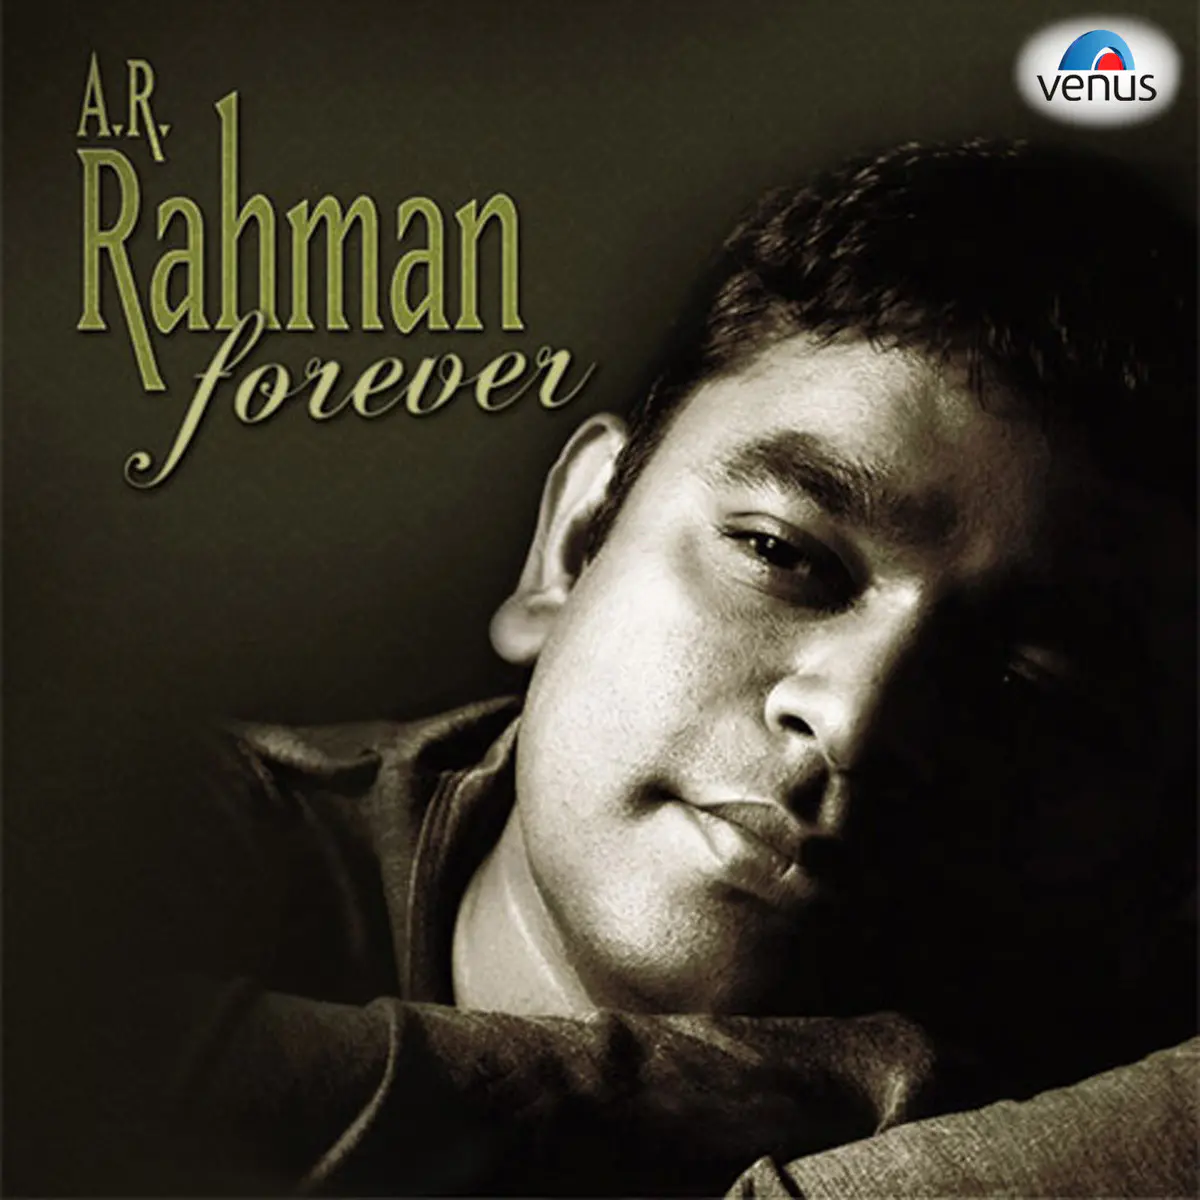 Arima Arima Lyrics In Hindi A R Rahman Forever Arima Arima Song Lyrics In English Free Online On Gaana Com